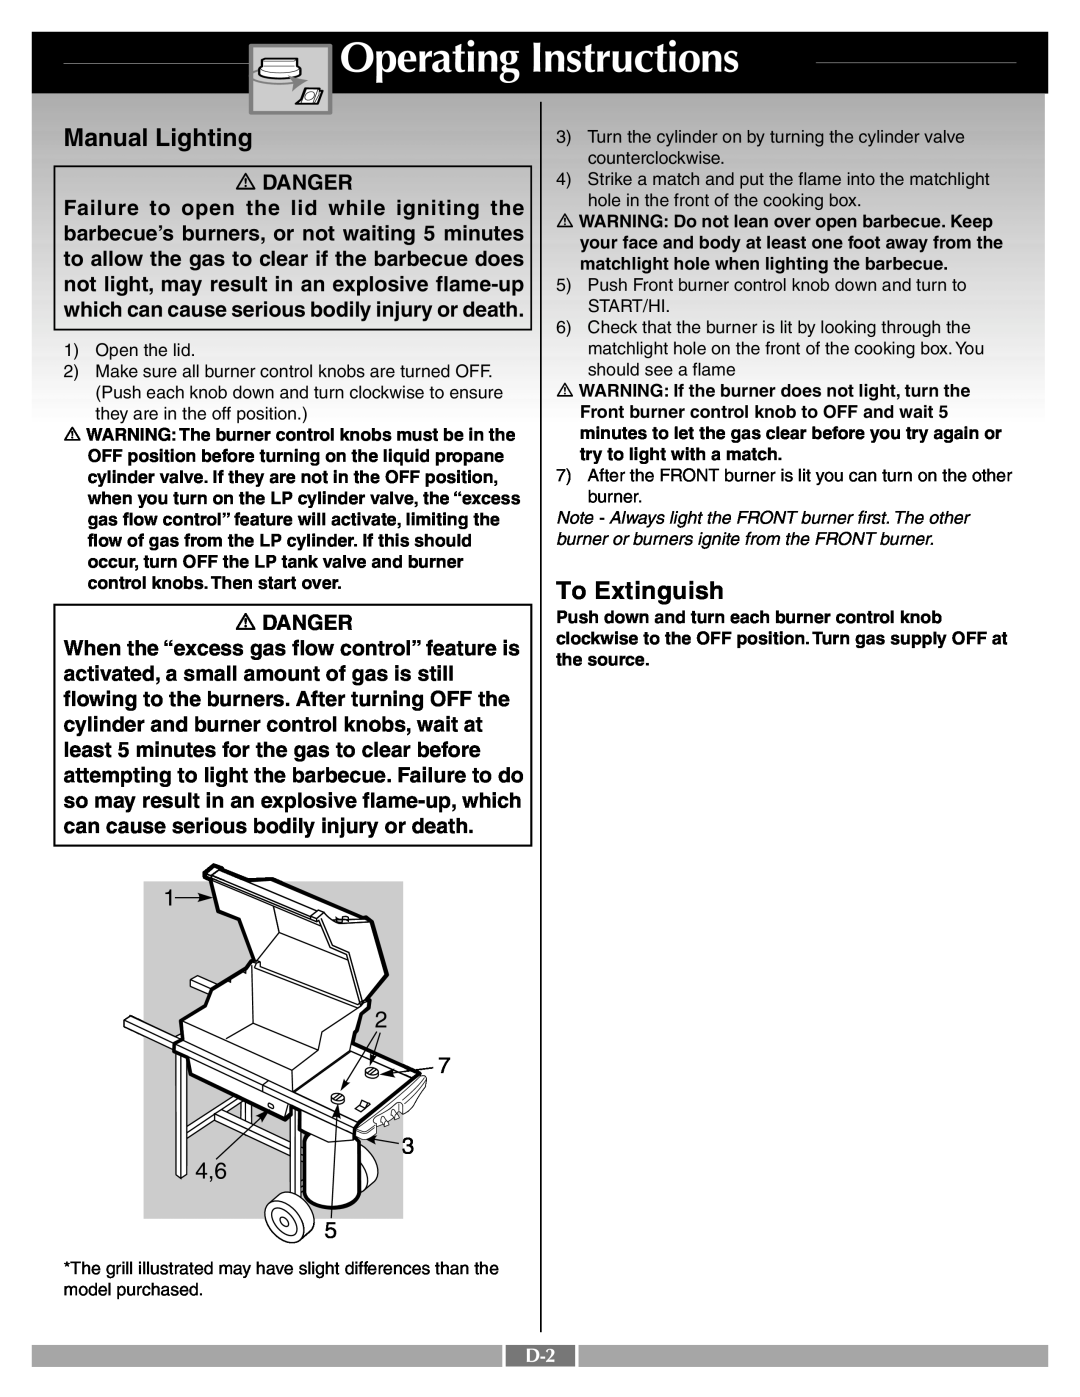 Weber 55545 manual Manual Lighting, Operating Instructions, To Extinguish, 3 4,6, Danger 